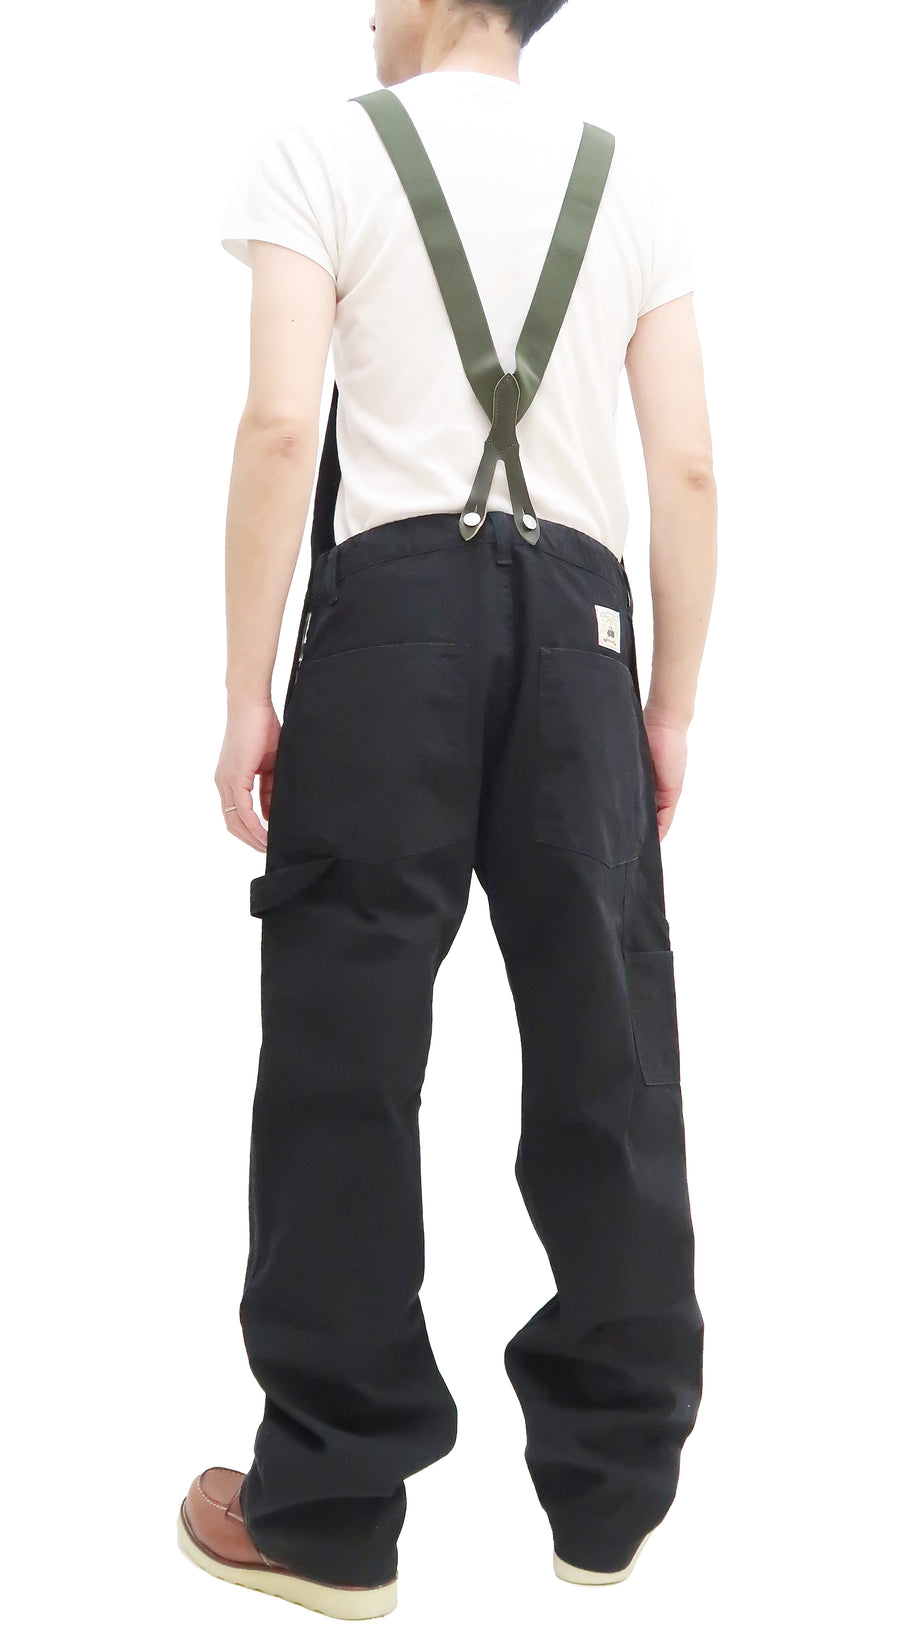 Kojima Genes Overalls Men's Casual Duck Bib Overall with Suspender